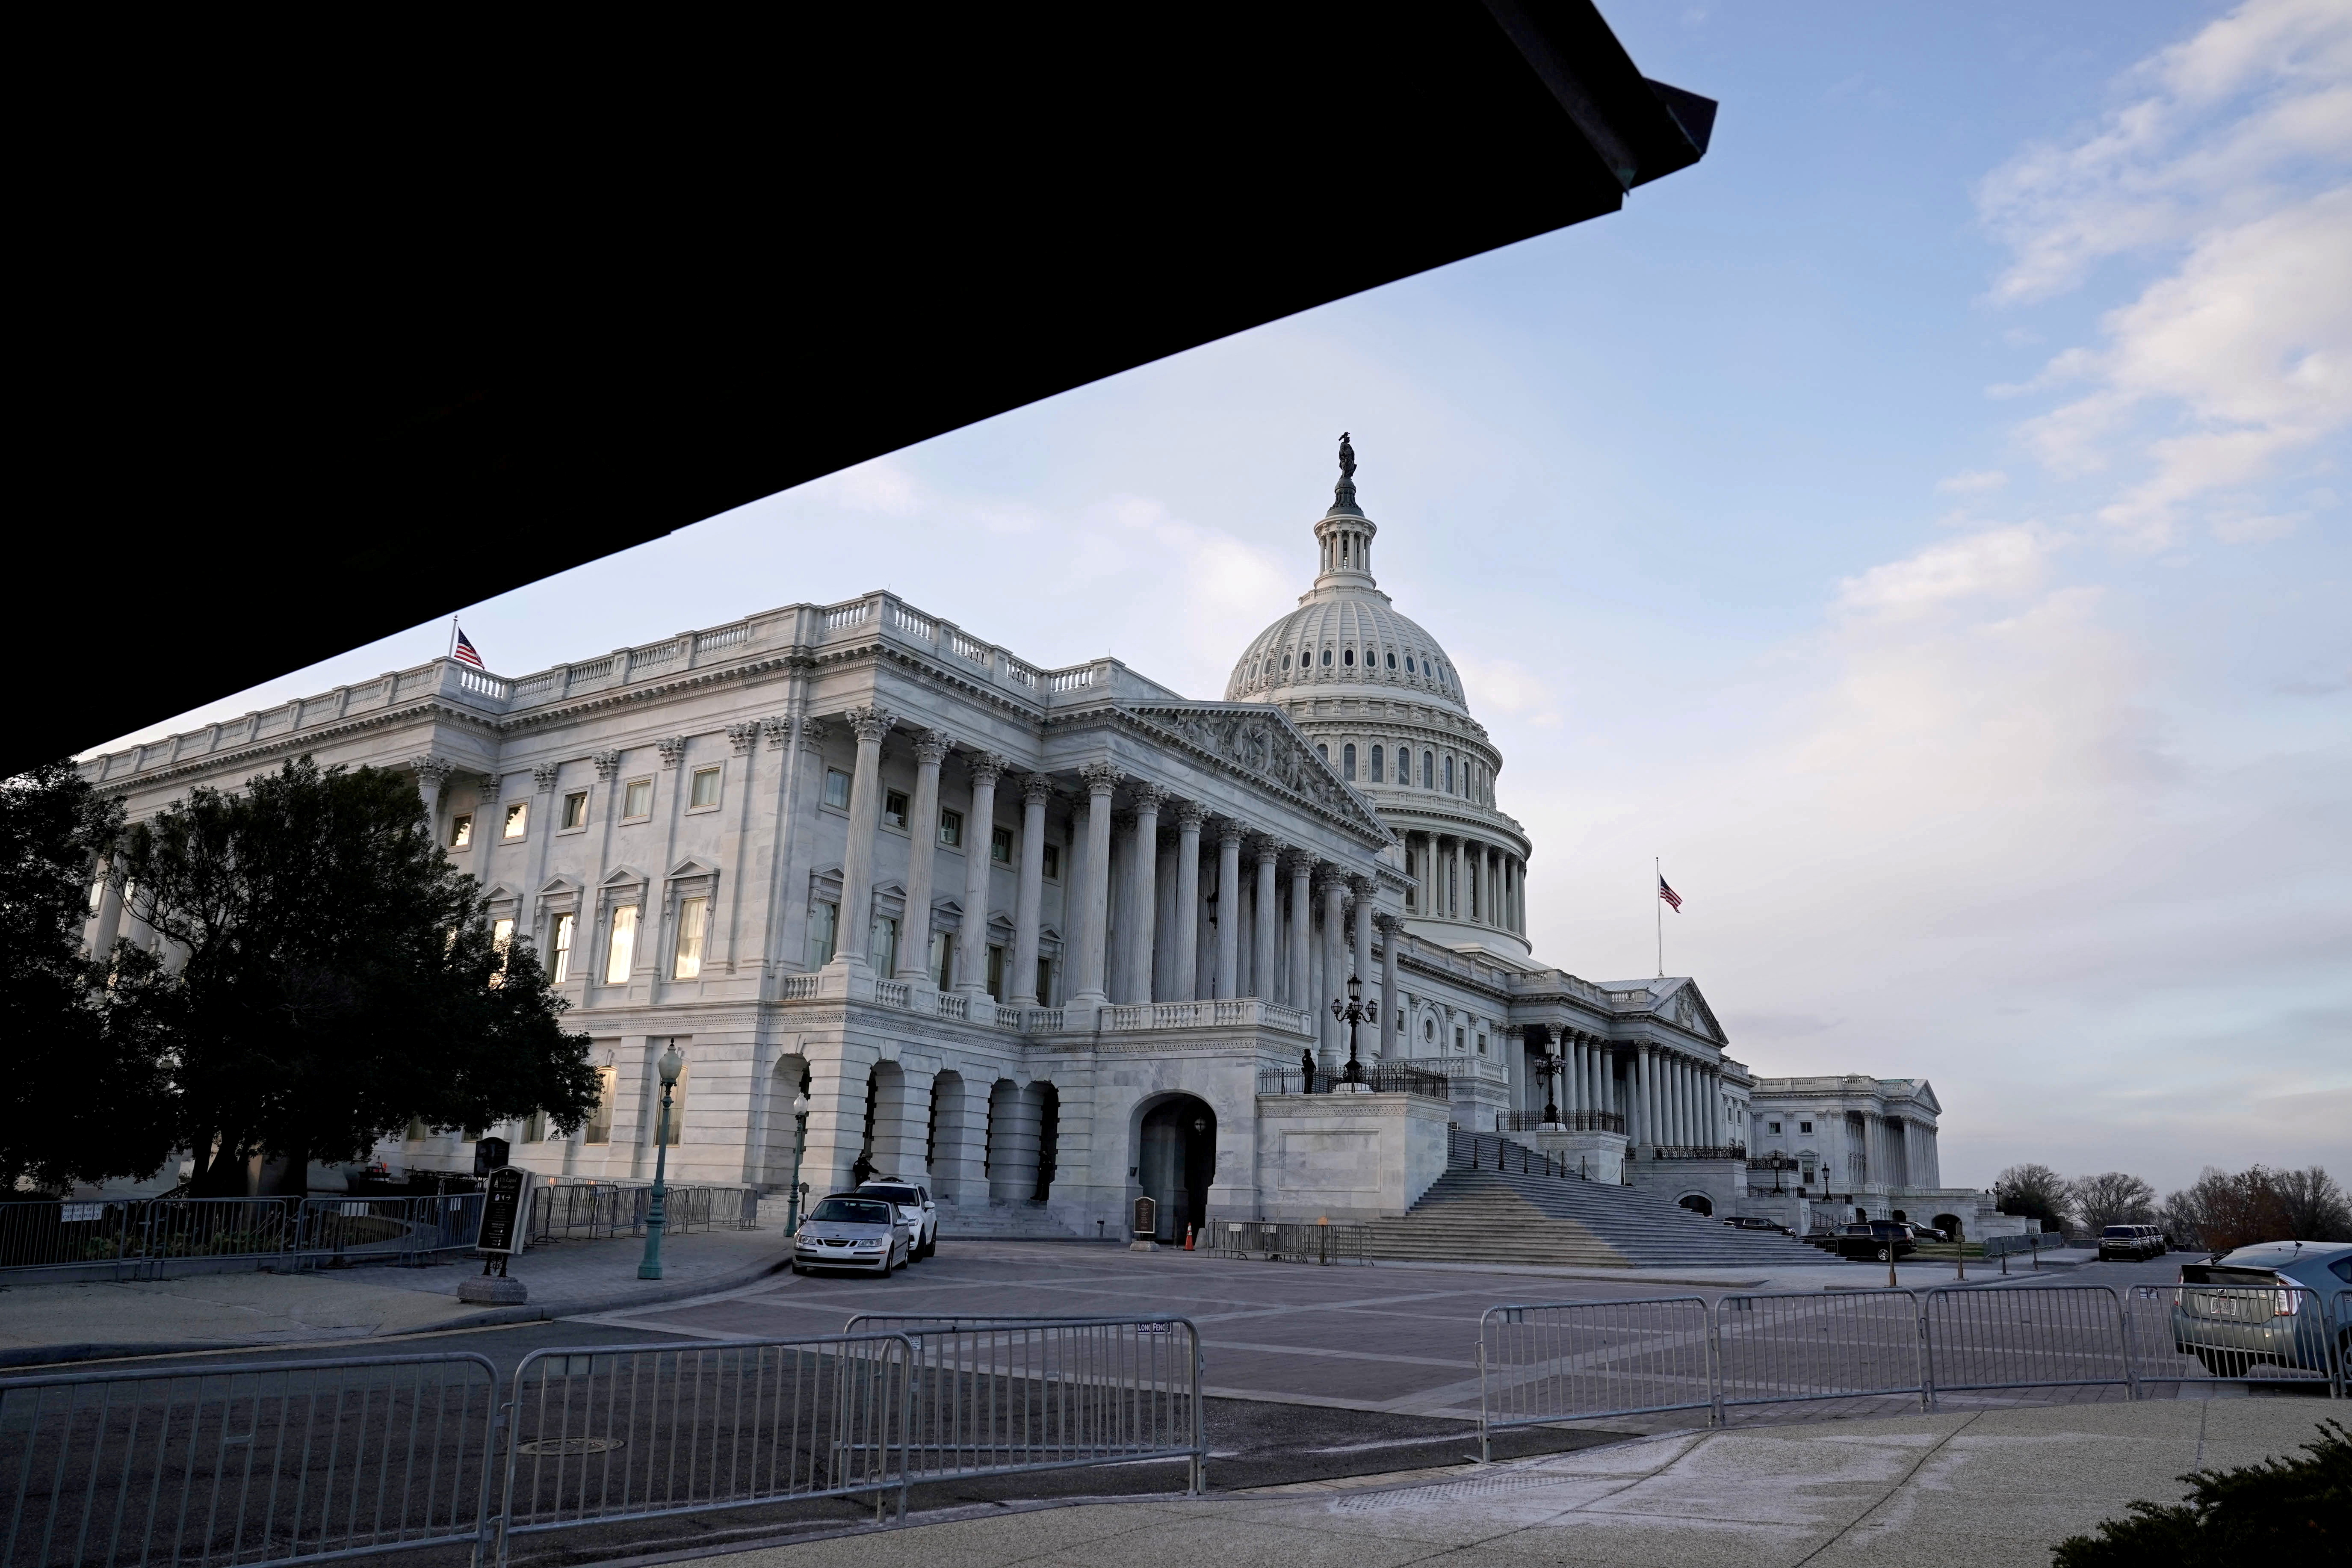  A view of the U.S. Capitol Building in Washington, D.C. REUTERS/Ken Cedeno